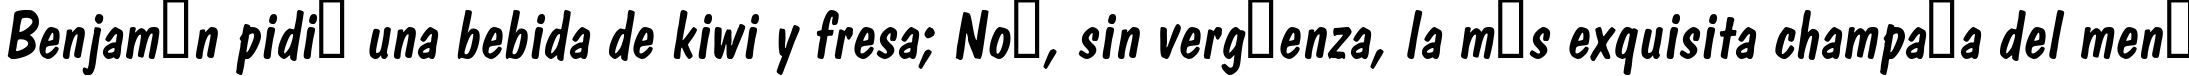 Пример написания шрифтом a_DomIno Italic текста на испанском